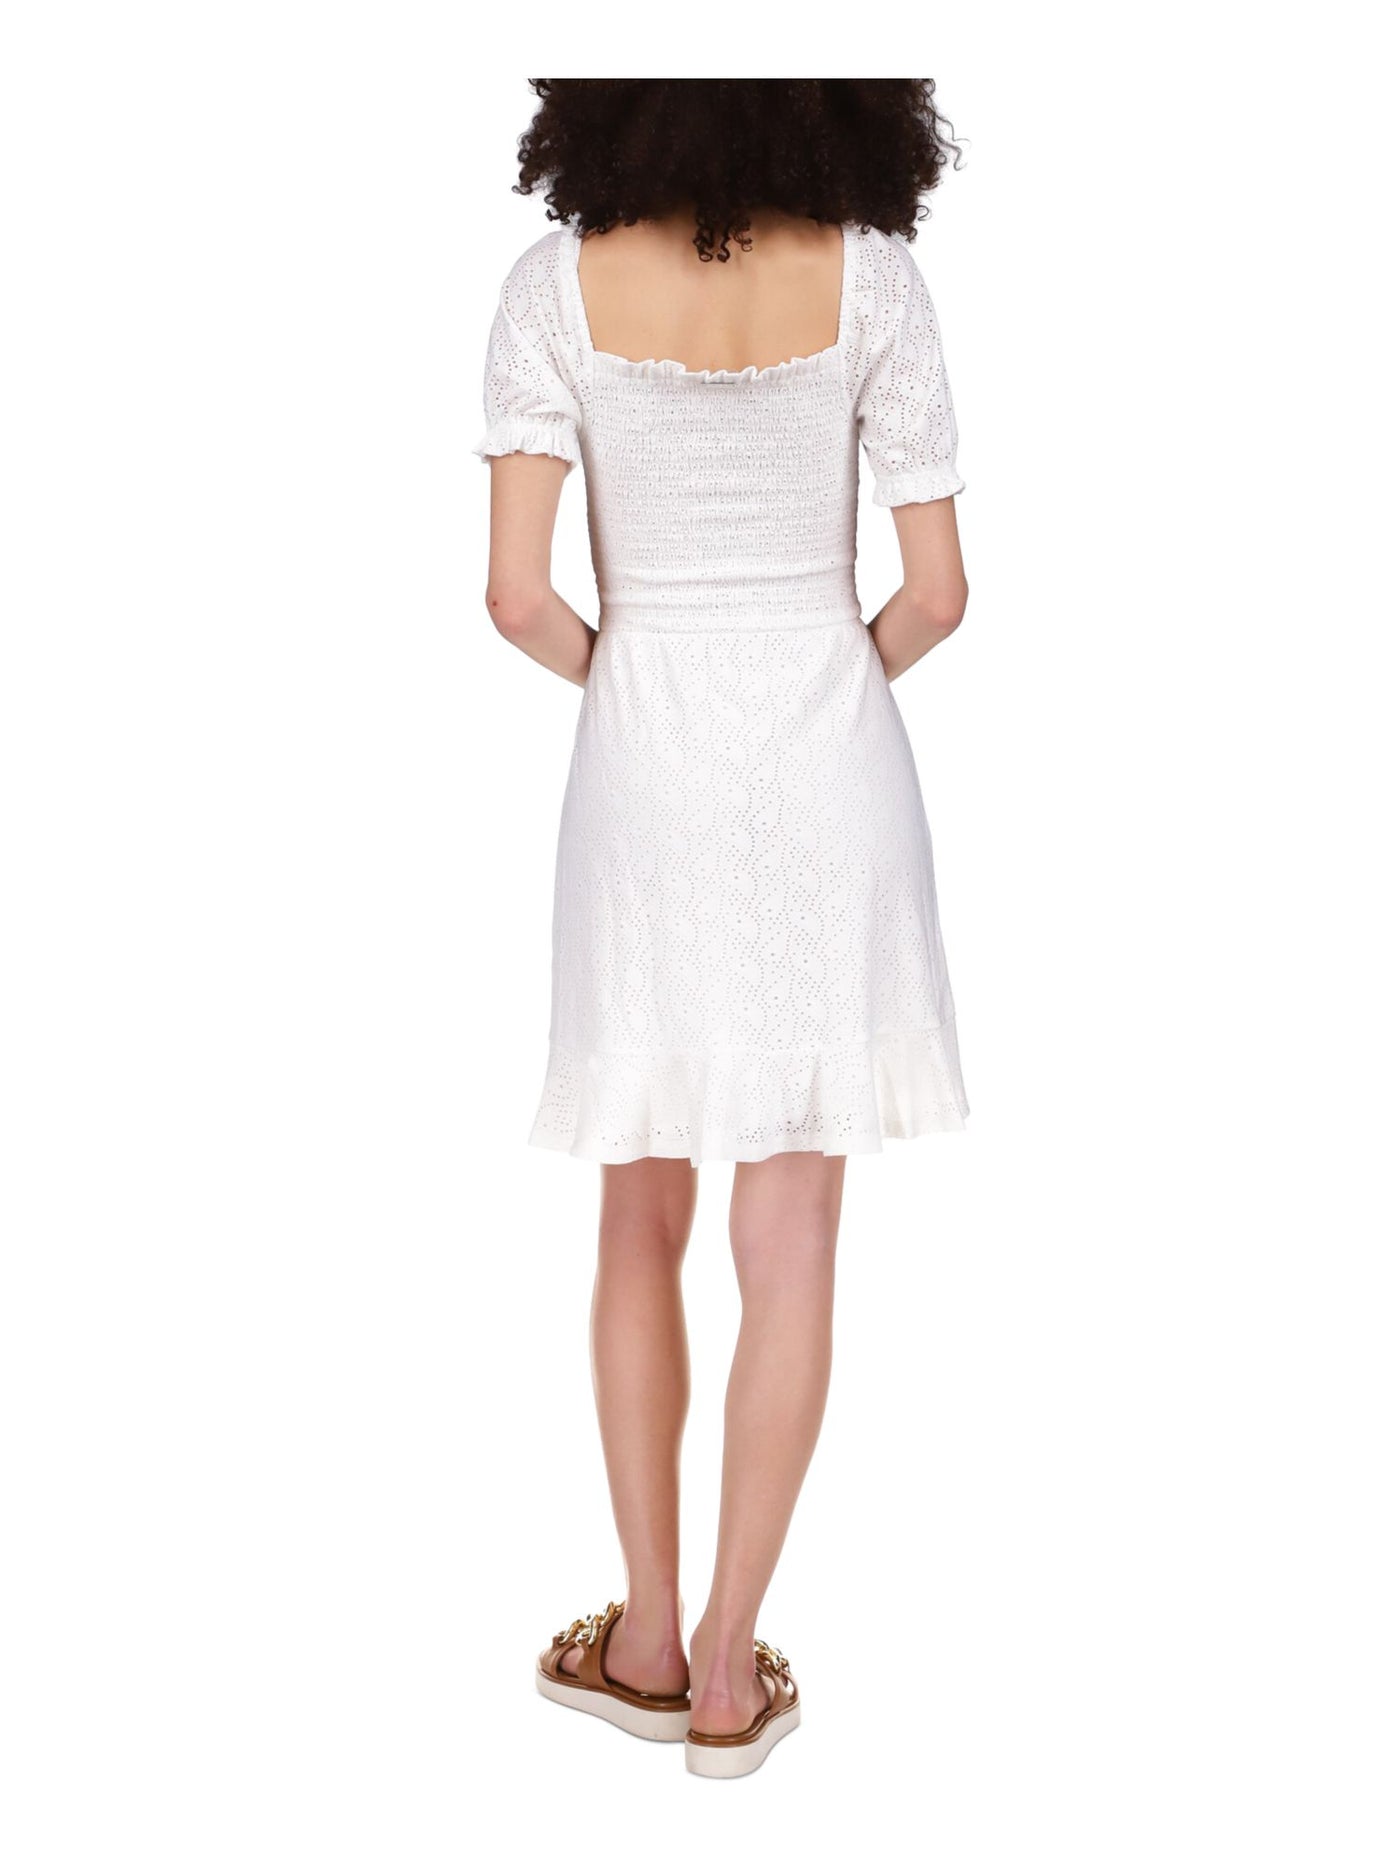 MICHAEL KORS Womens White Smocked Eyelet Peasant Dress Ruffled Logo Plate Pouf Sleeve Square Neck Above The Knee Dress L